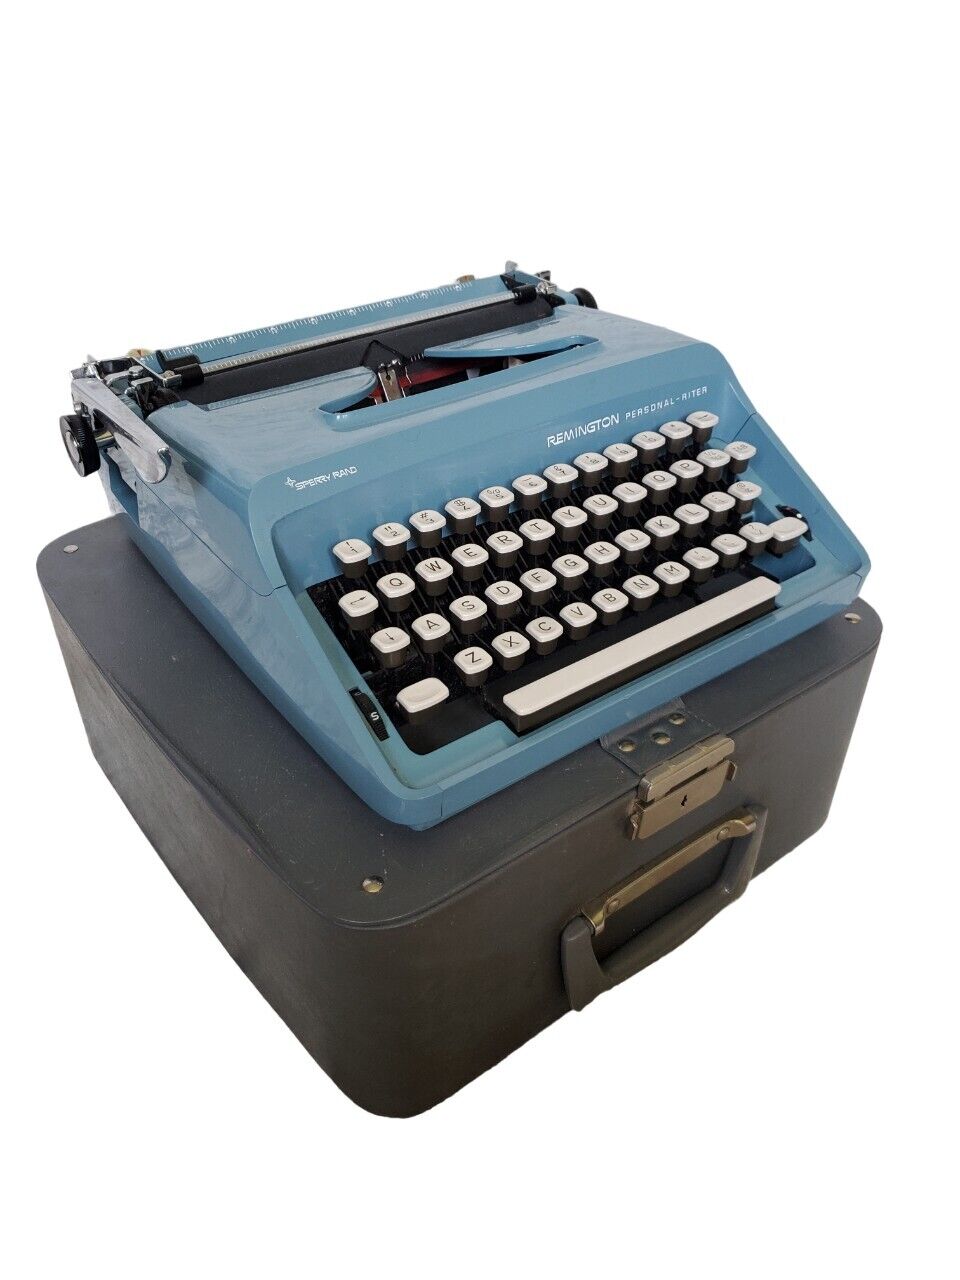 Vintage Remington Personal-Riter Typewriter Sperry Rand Portable Case Key Blue